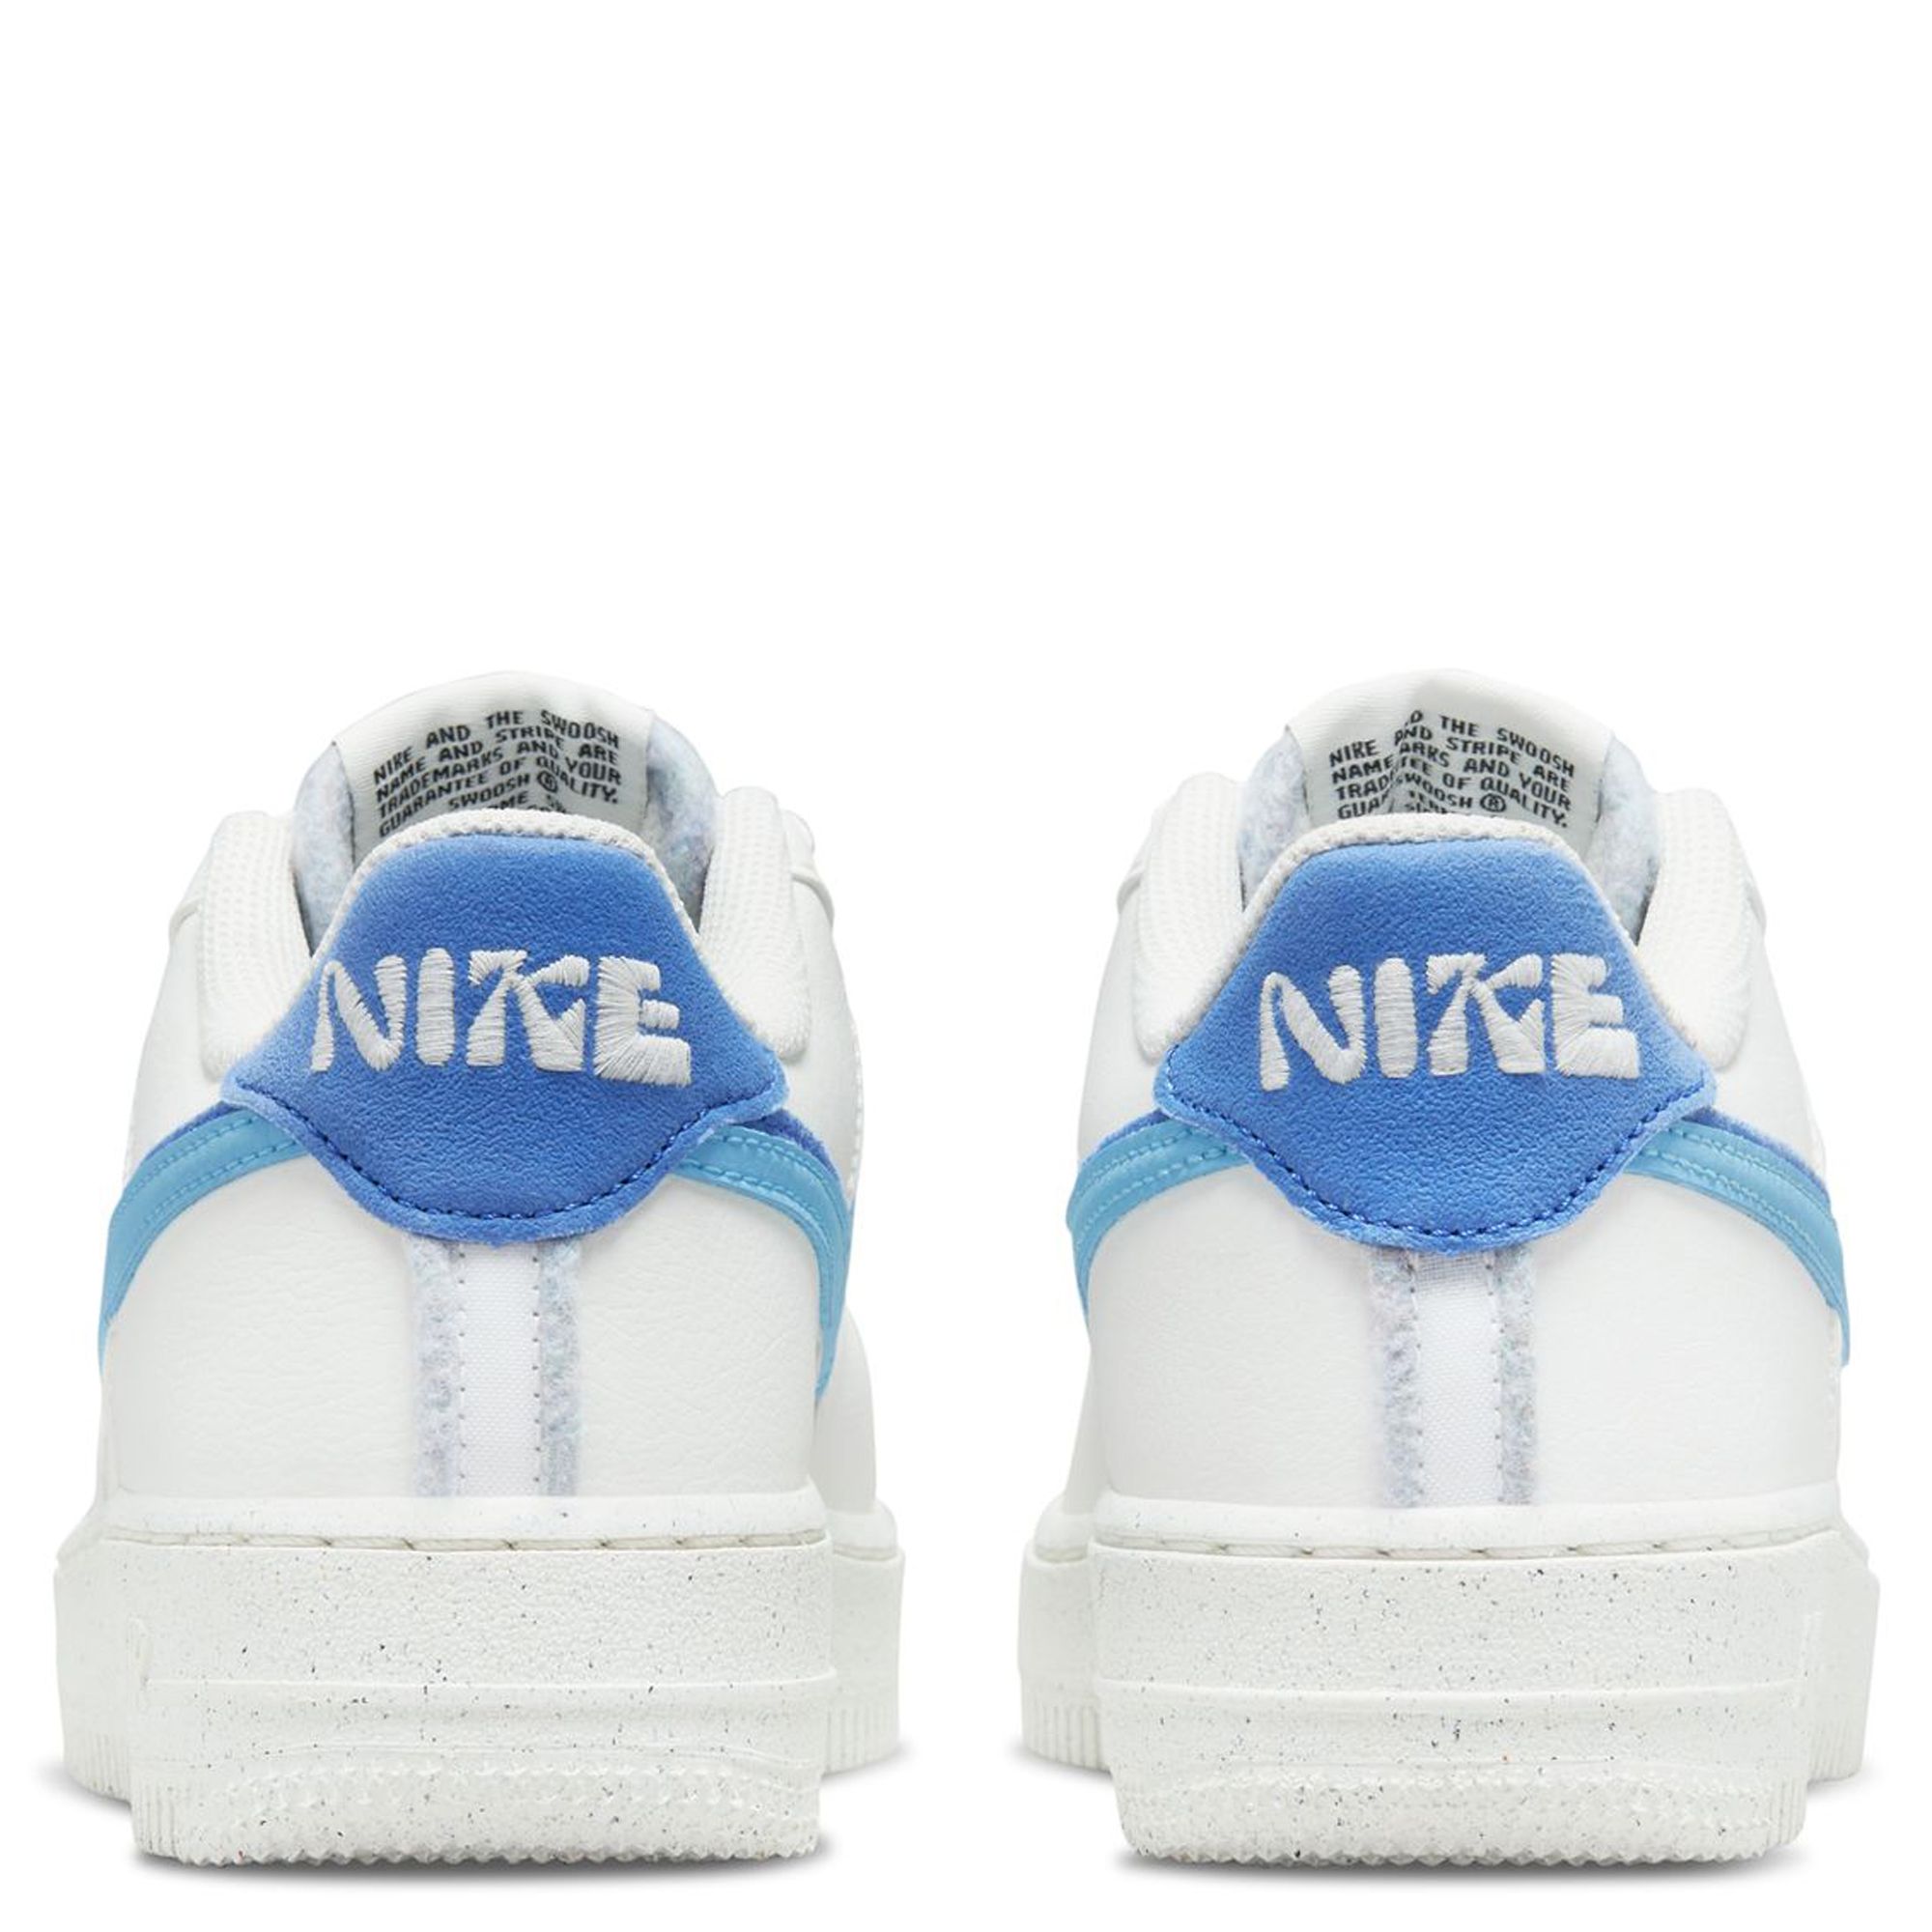 Nike Air Force 1 '07 LV8 (DO9786-100) "Sail/Blue/White"  Men's Sneakers